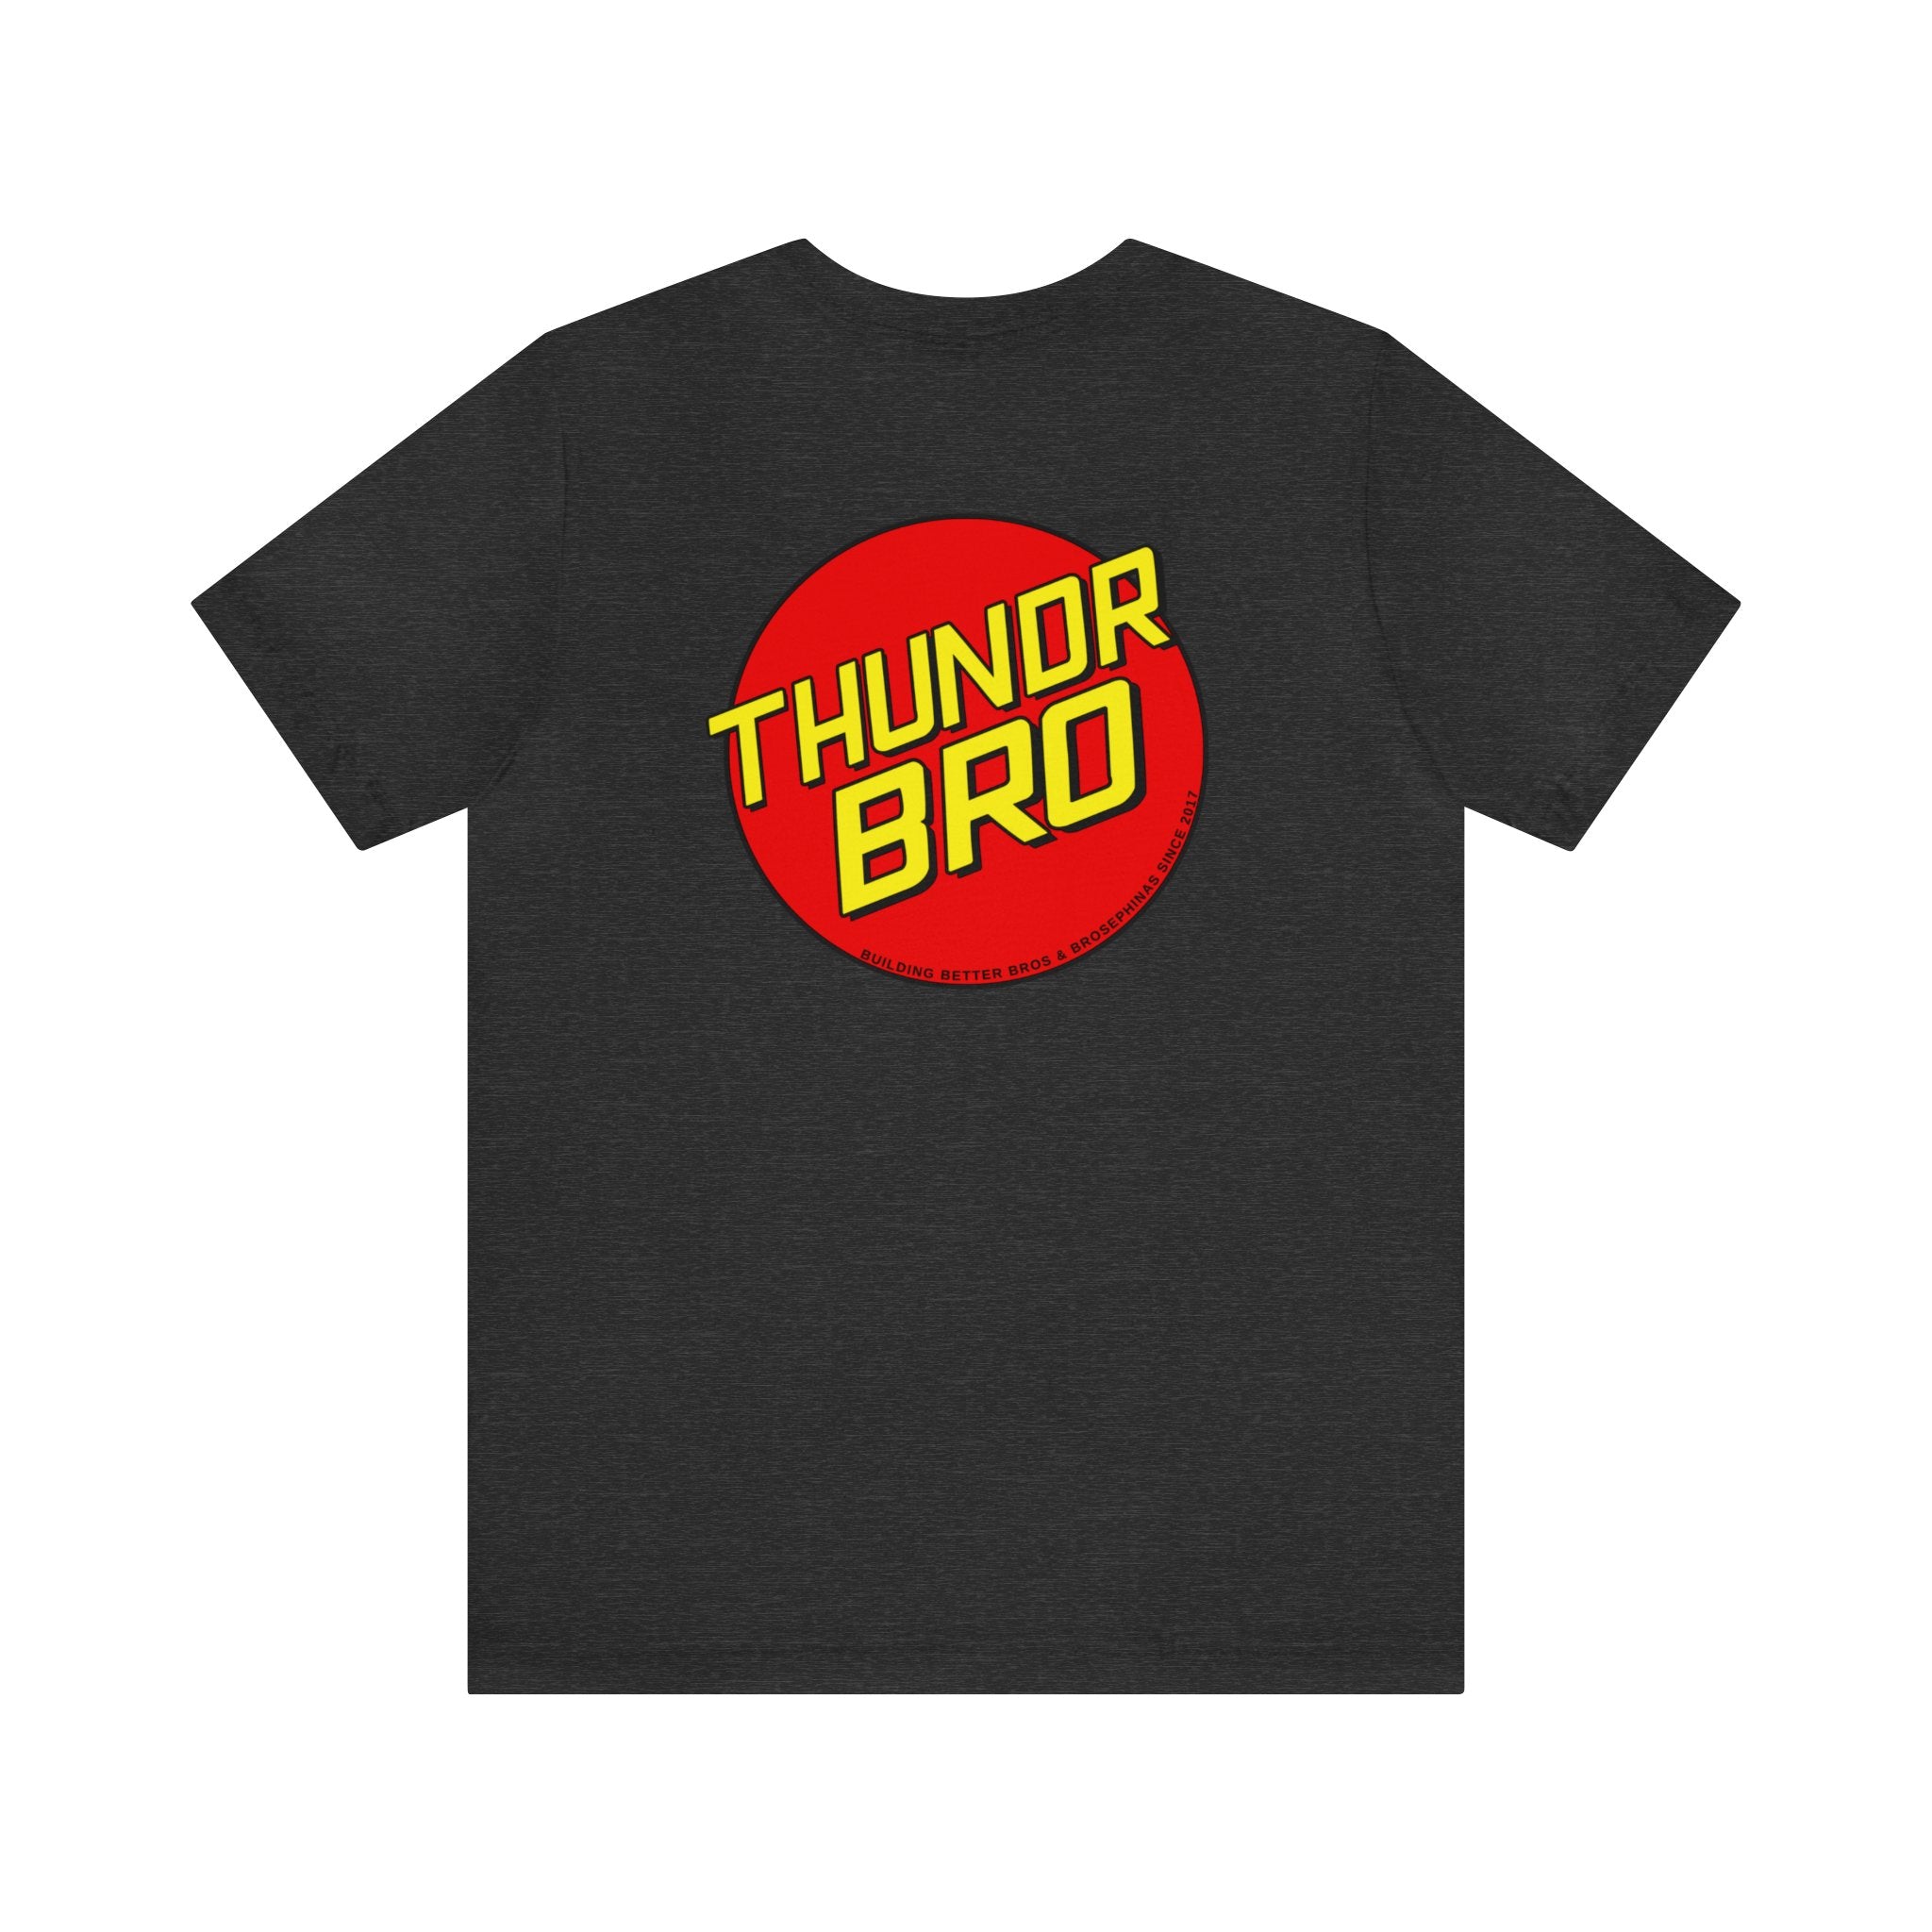 Thundrbro Cruzin' T-Shirt